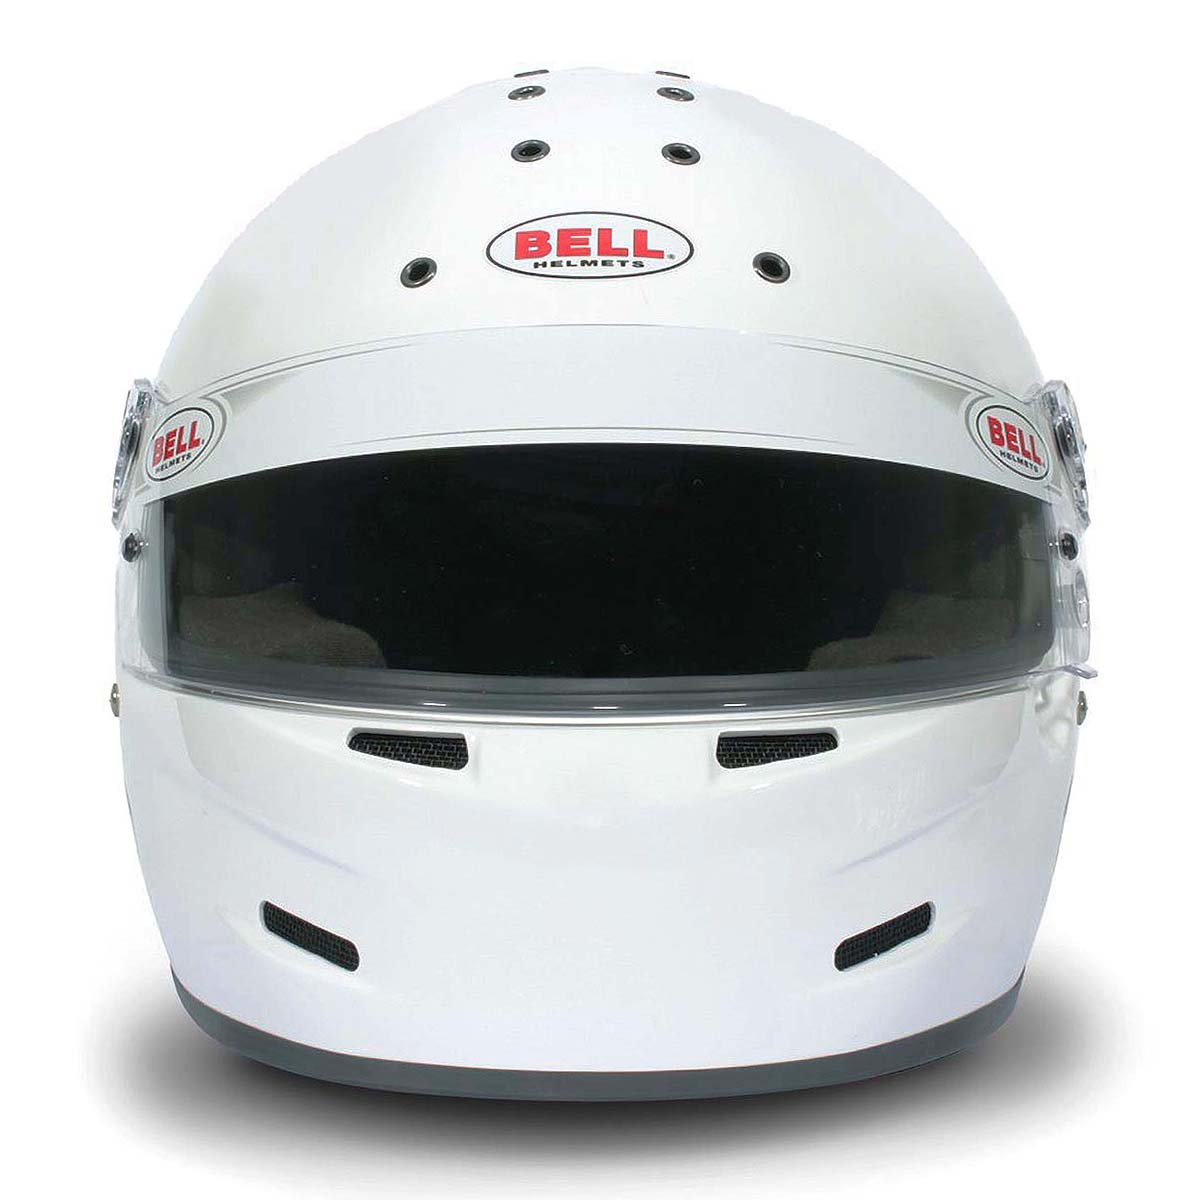 Bell k1 sport Helmet SA2020 Front View Image